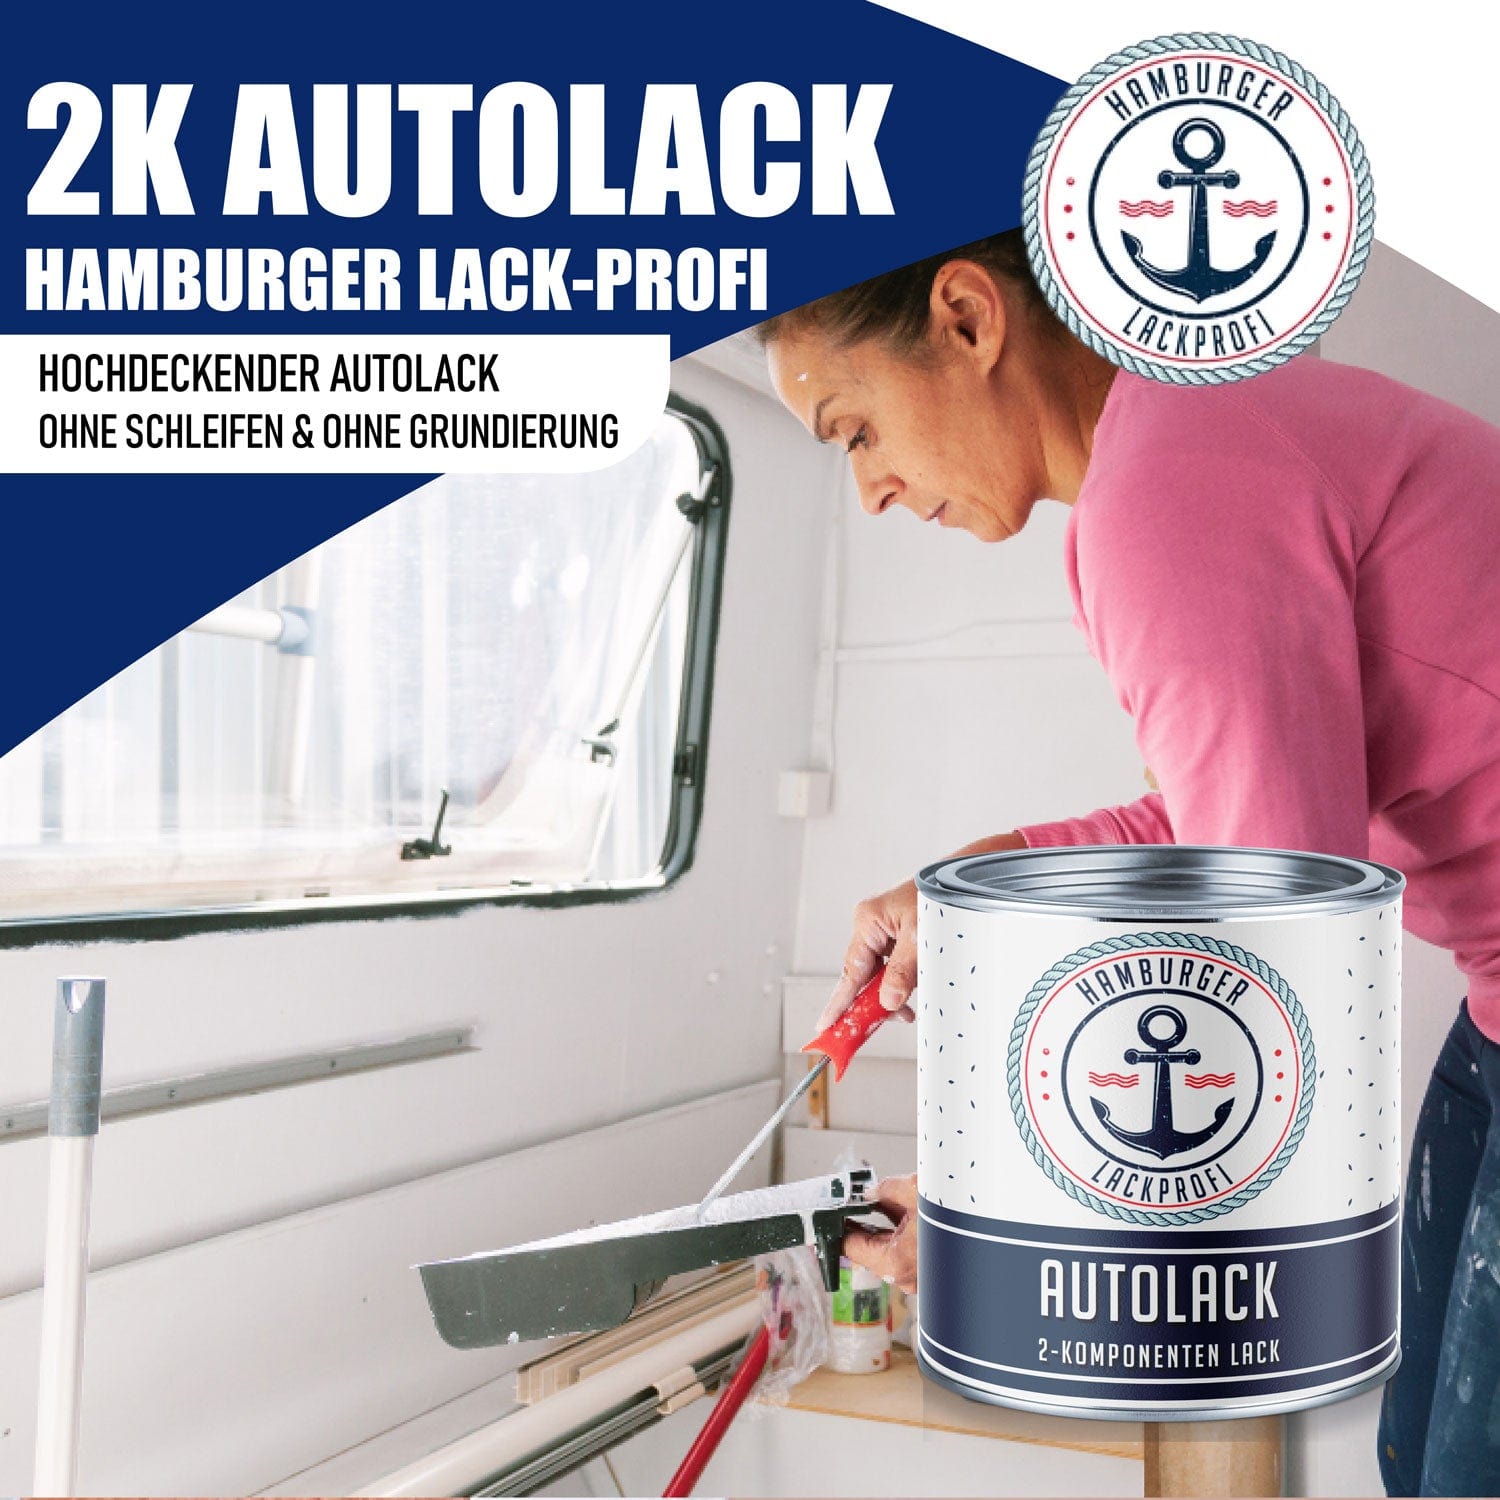 Hamburger Lack-Profi Lacke & Beschichtungen Hamburger Lack-Profi 2K Autolack in Umbragrau RAL 7022 mit Lackierset (X300) & Verdünnung (1 L) - 30% Sparangebot